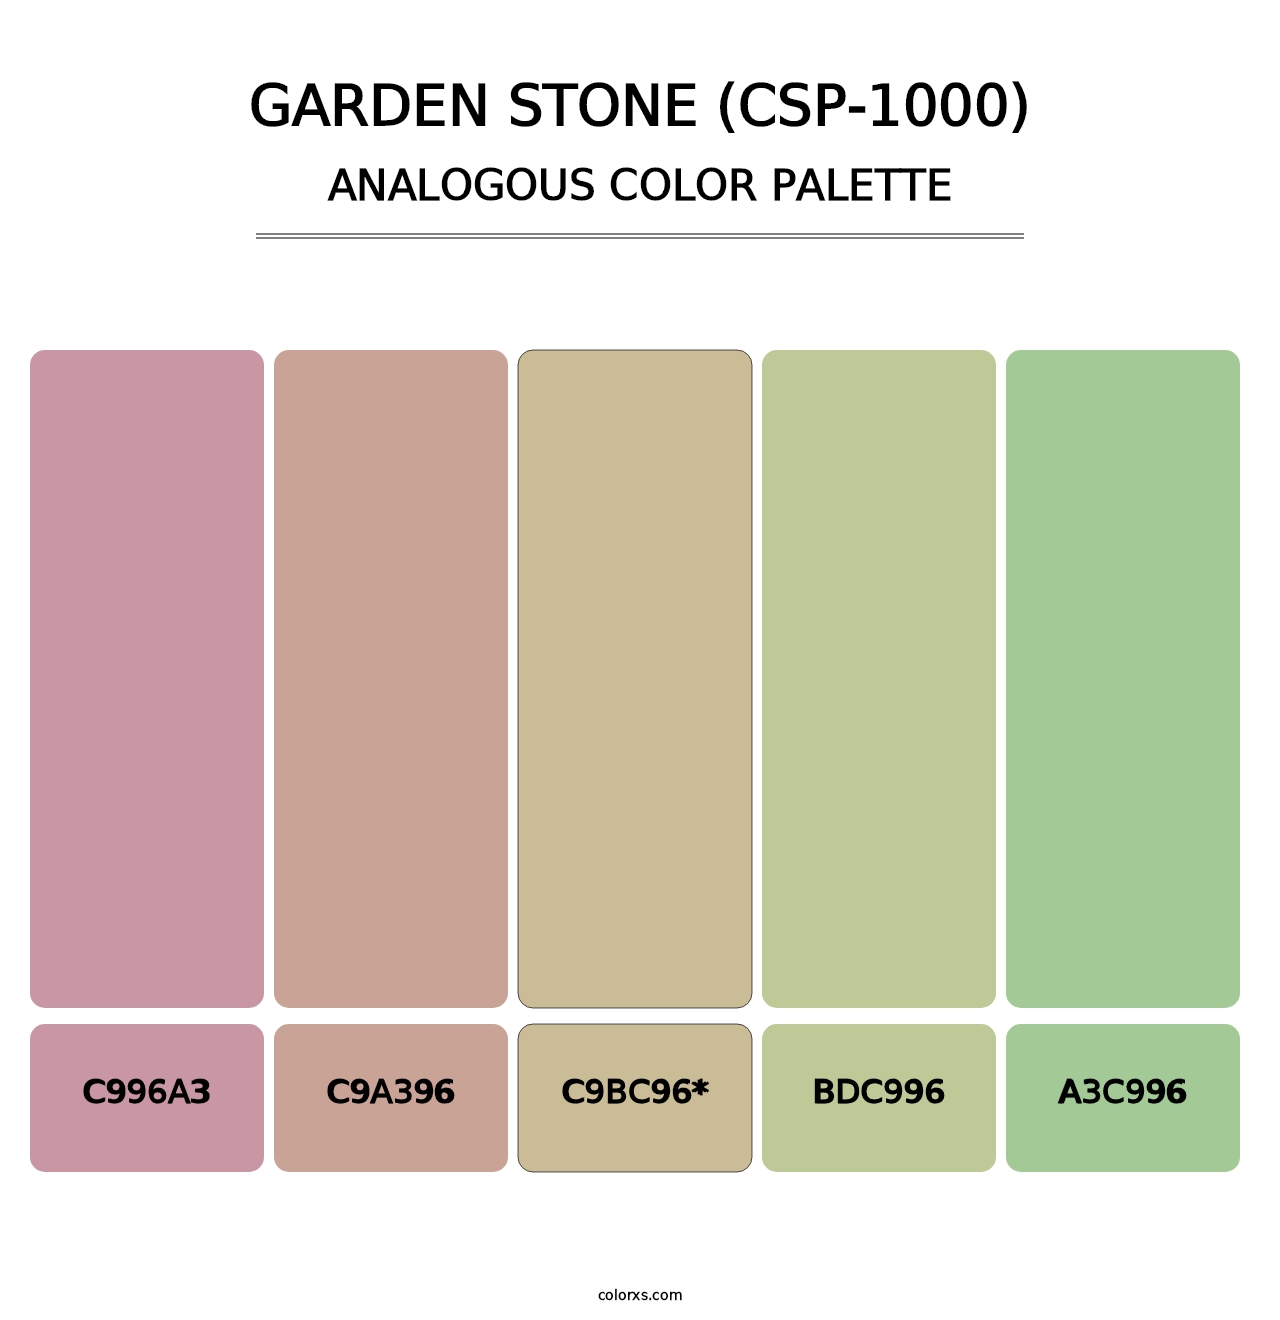 Garden Stone (CSP-1000) - Analogous Color Palette